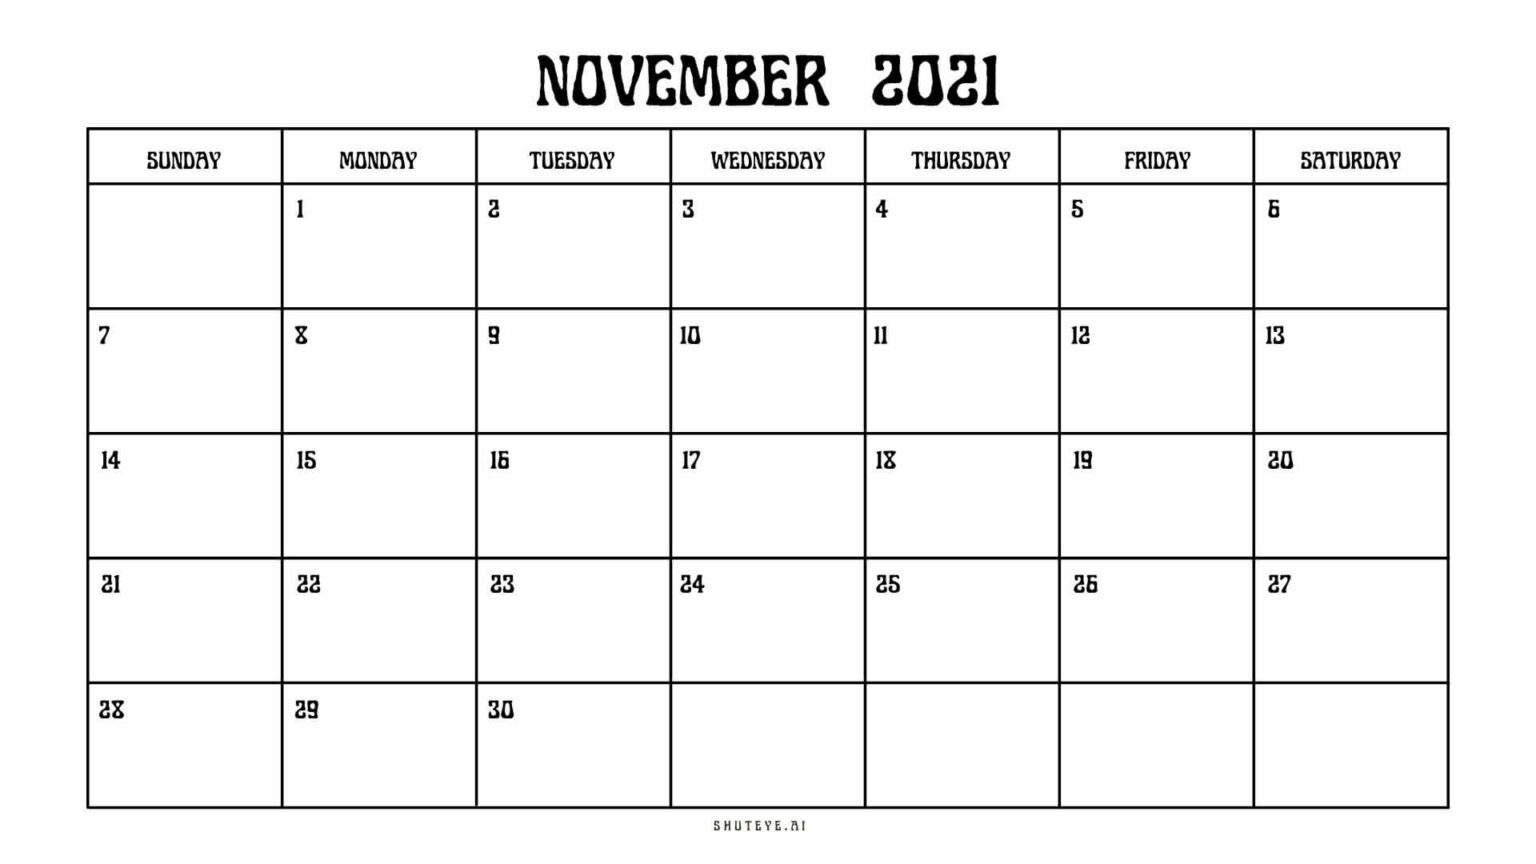 100+ Printable November Calendar Ideas | Free Calendars 2021 - ShutEye